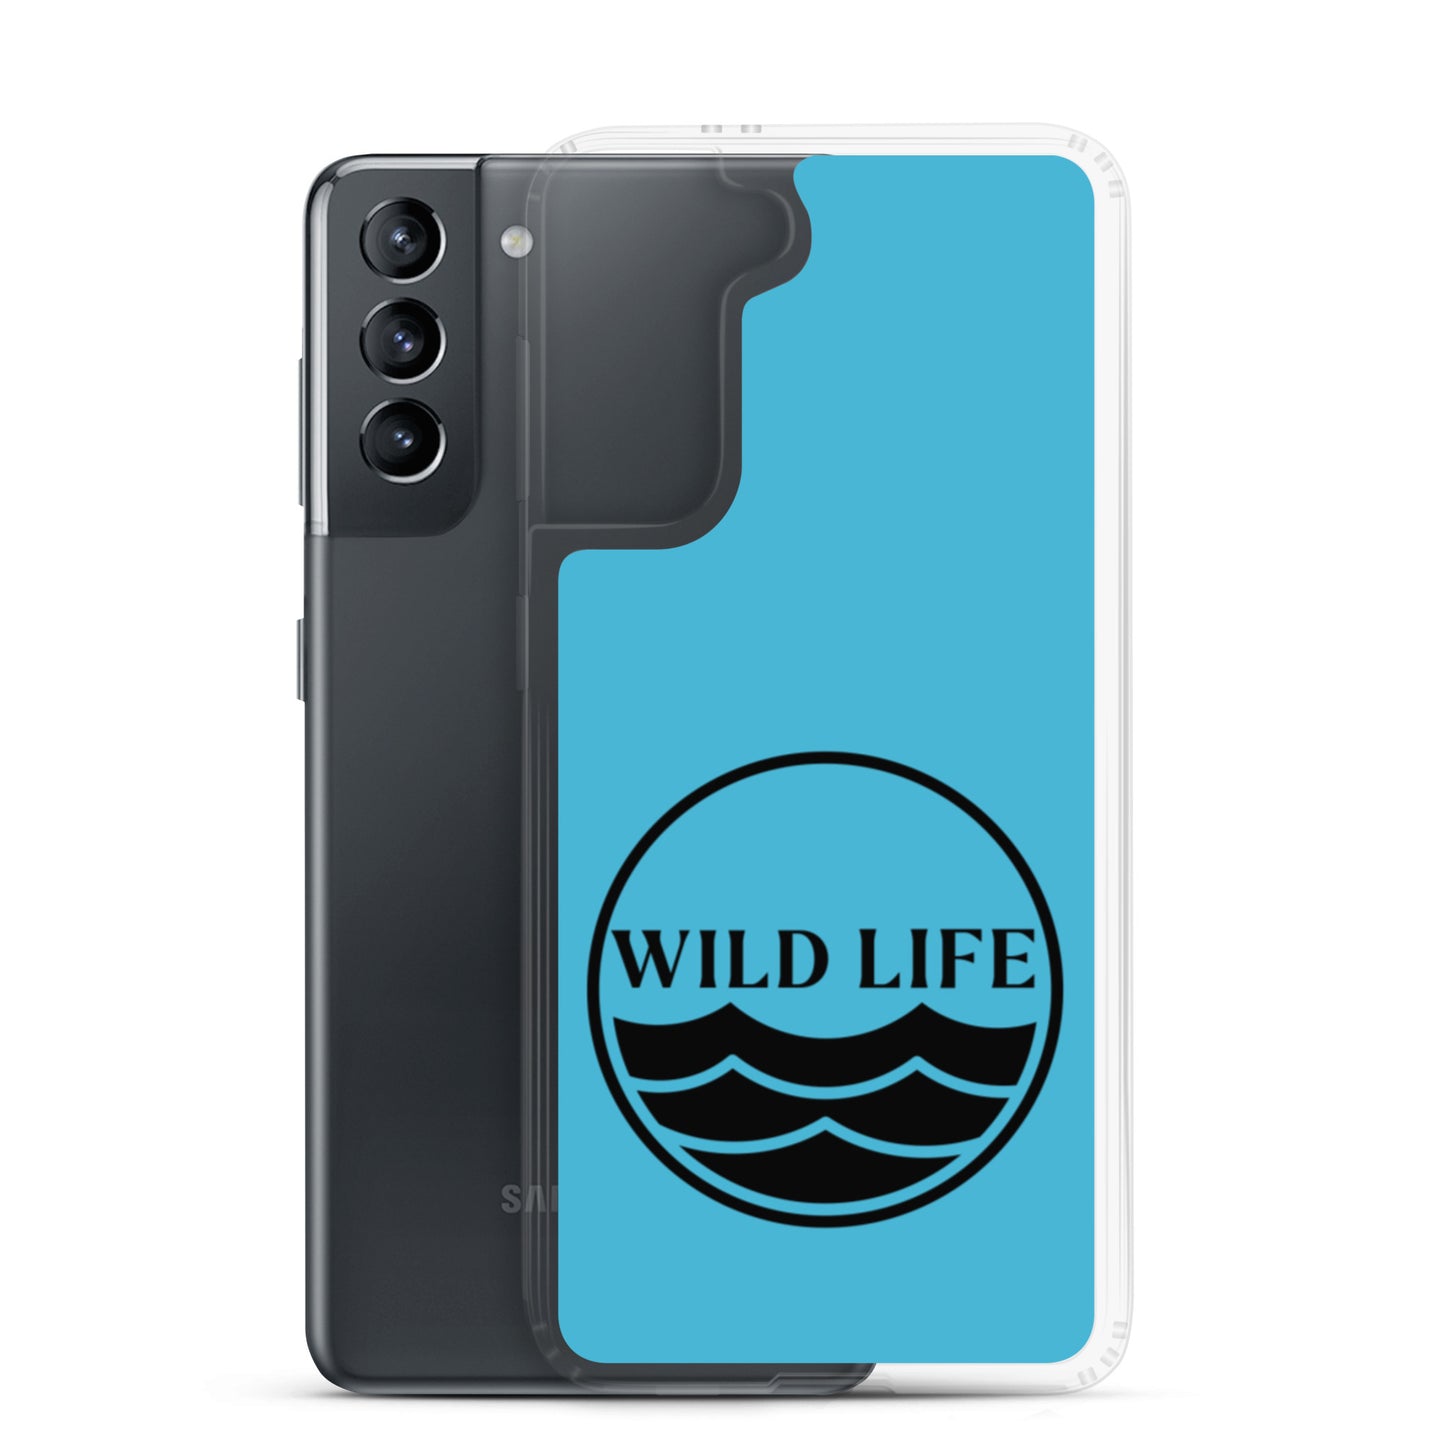 WILD LIFE Samsung Case - Sky